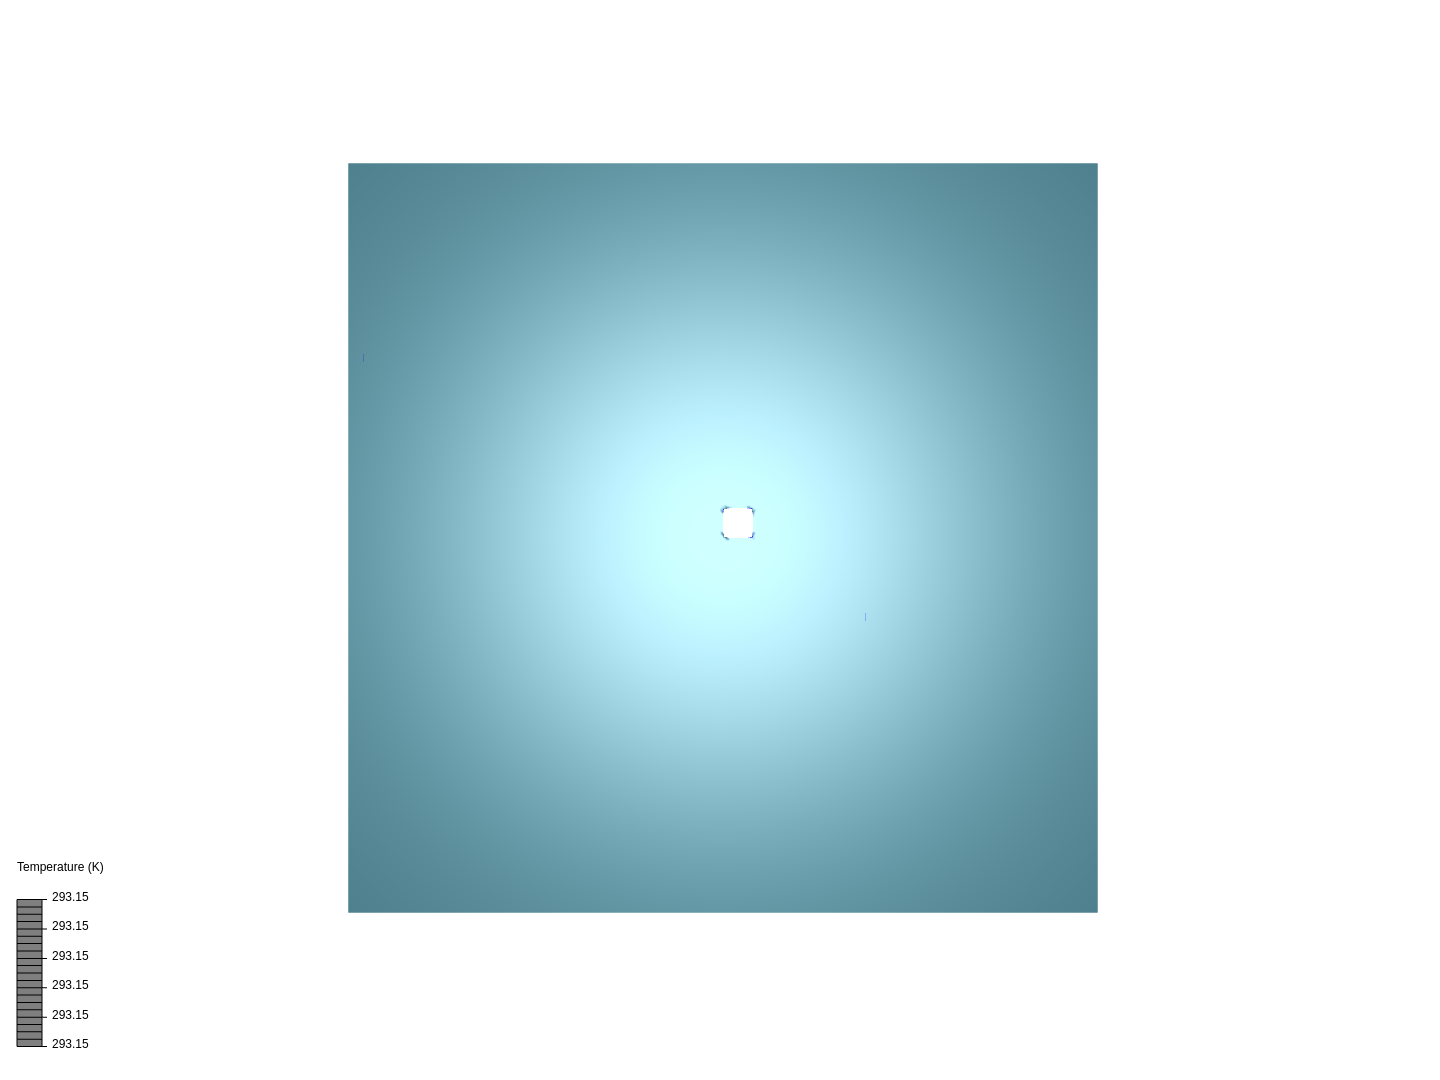 cube111 image